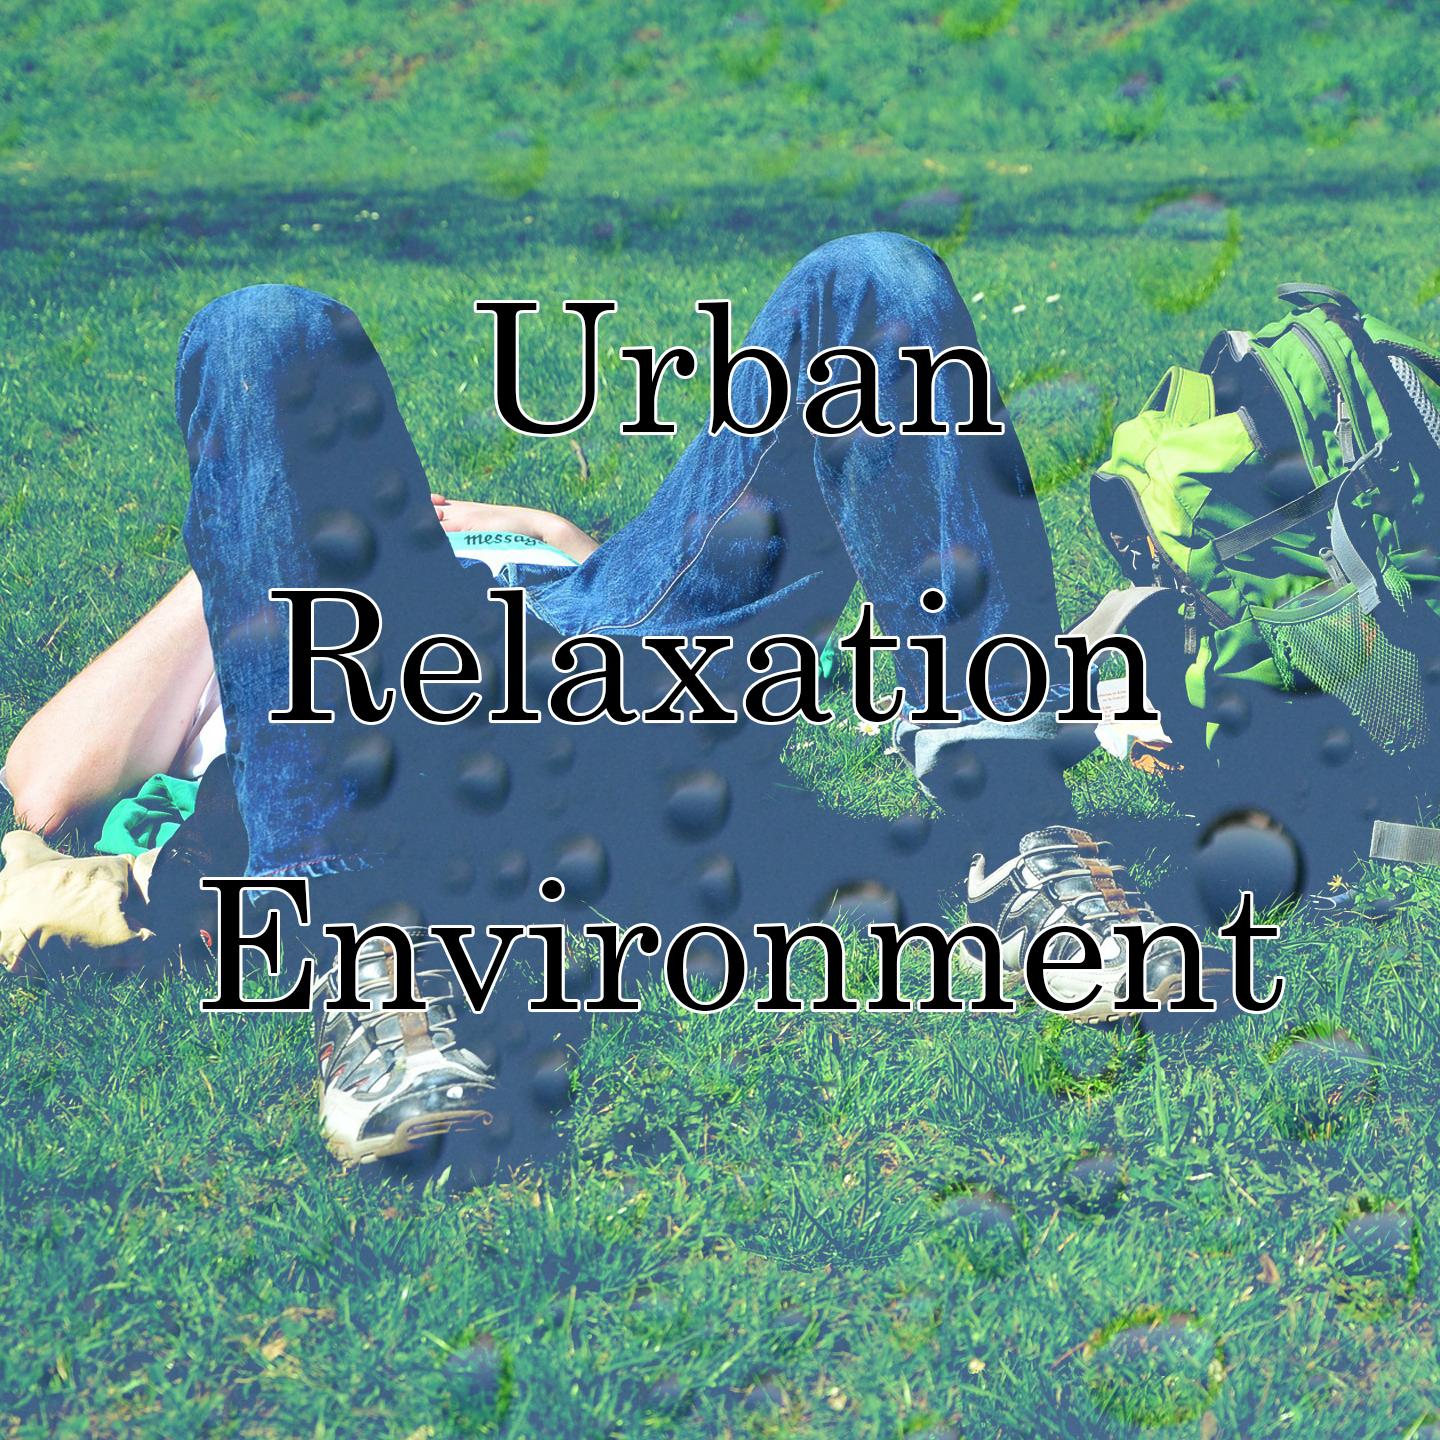 Urban Relaxation Environment